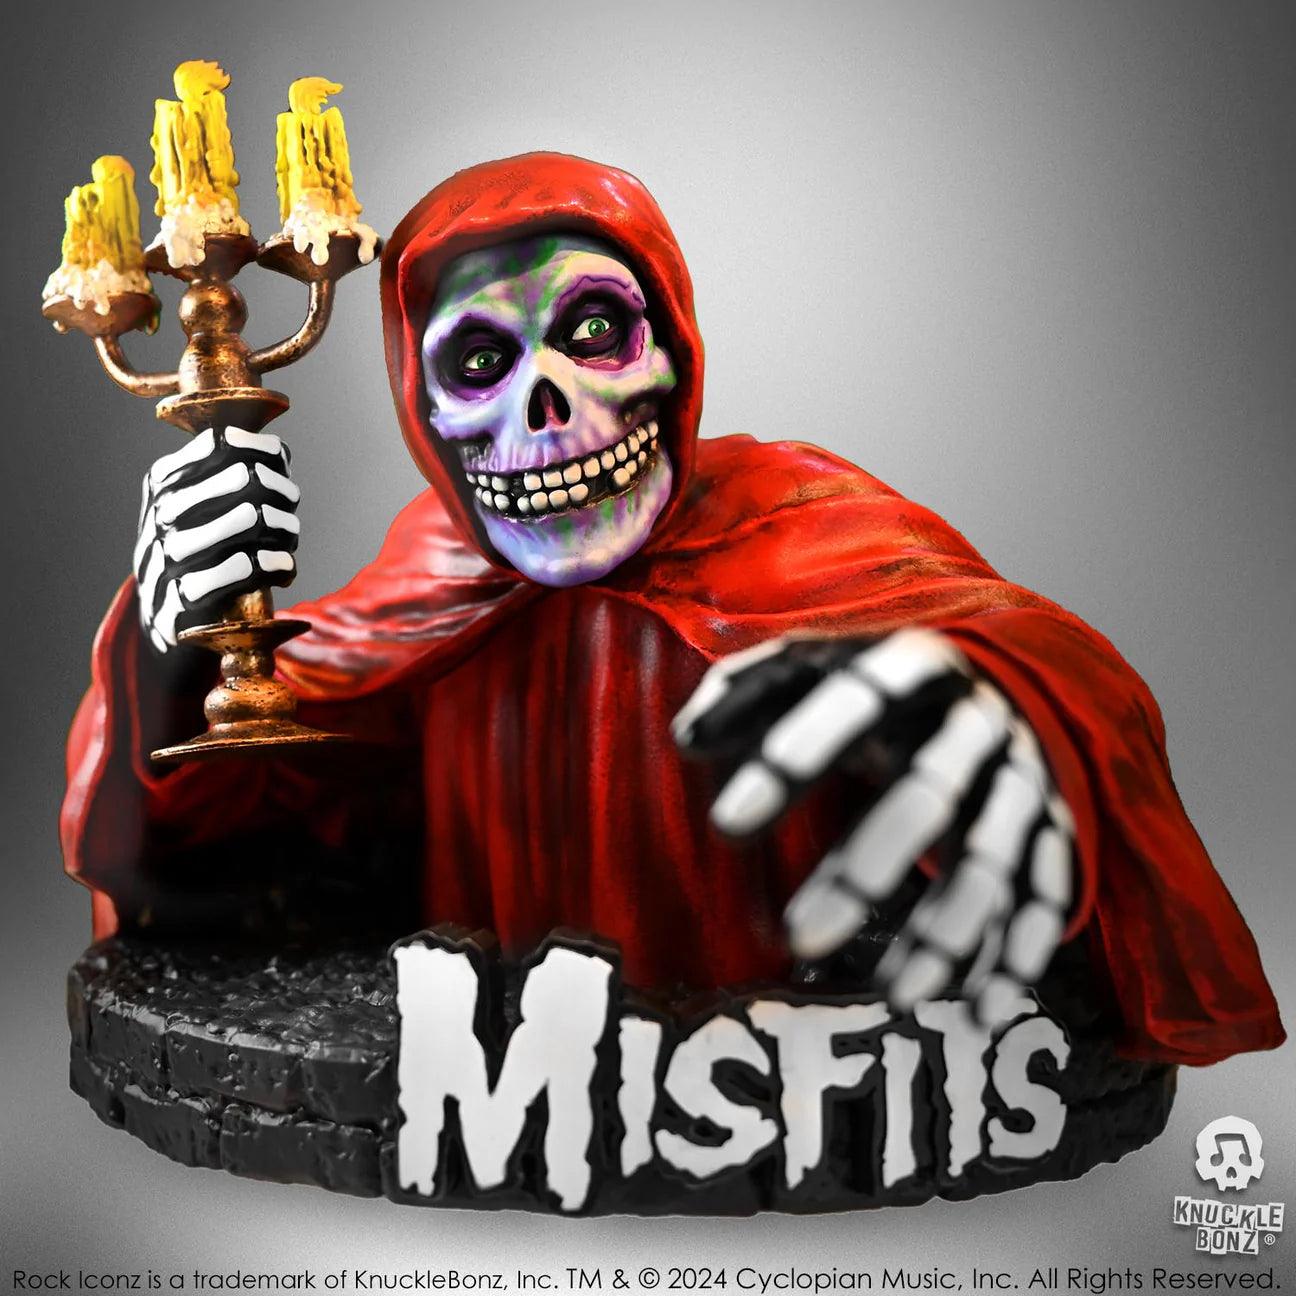 KNUMISFITSAMPSYCHO100 Misfits - American Psycho Fiend 3D Vinyl Statue - KnuckleBonz - Titan Pop Culture